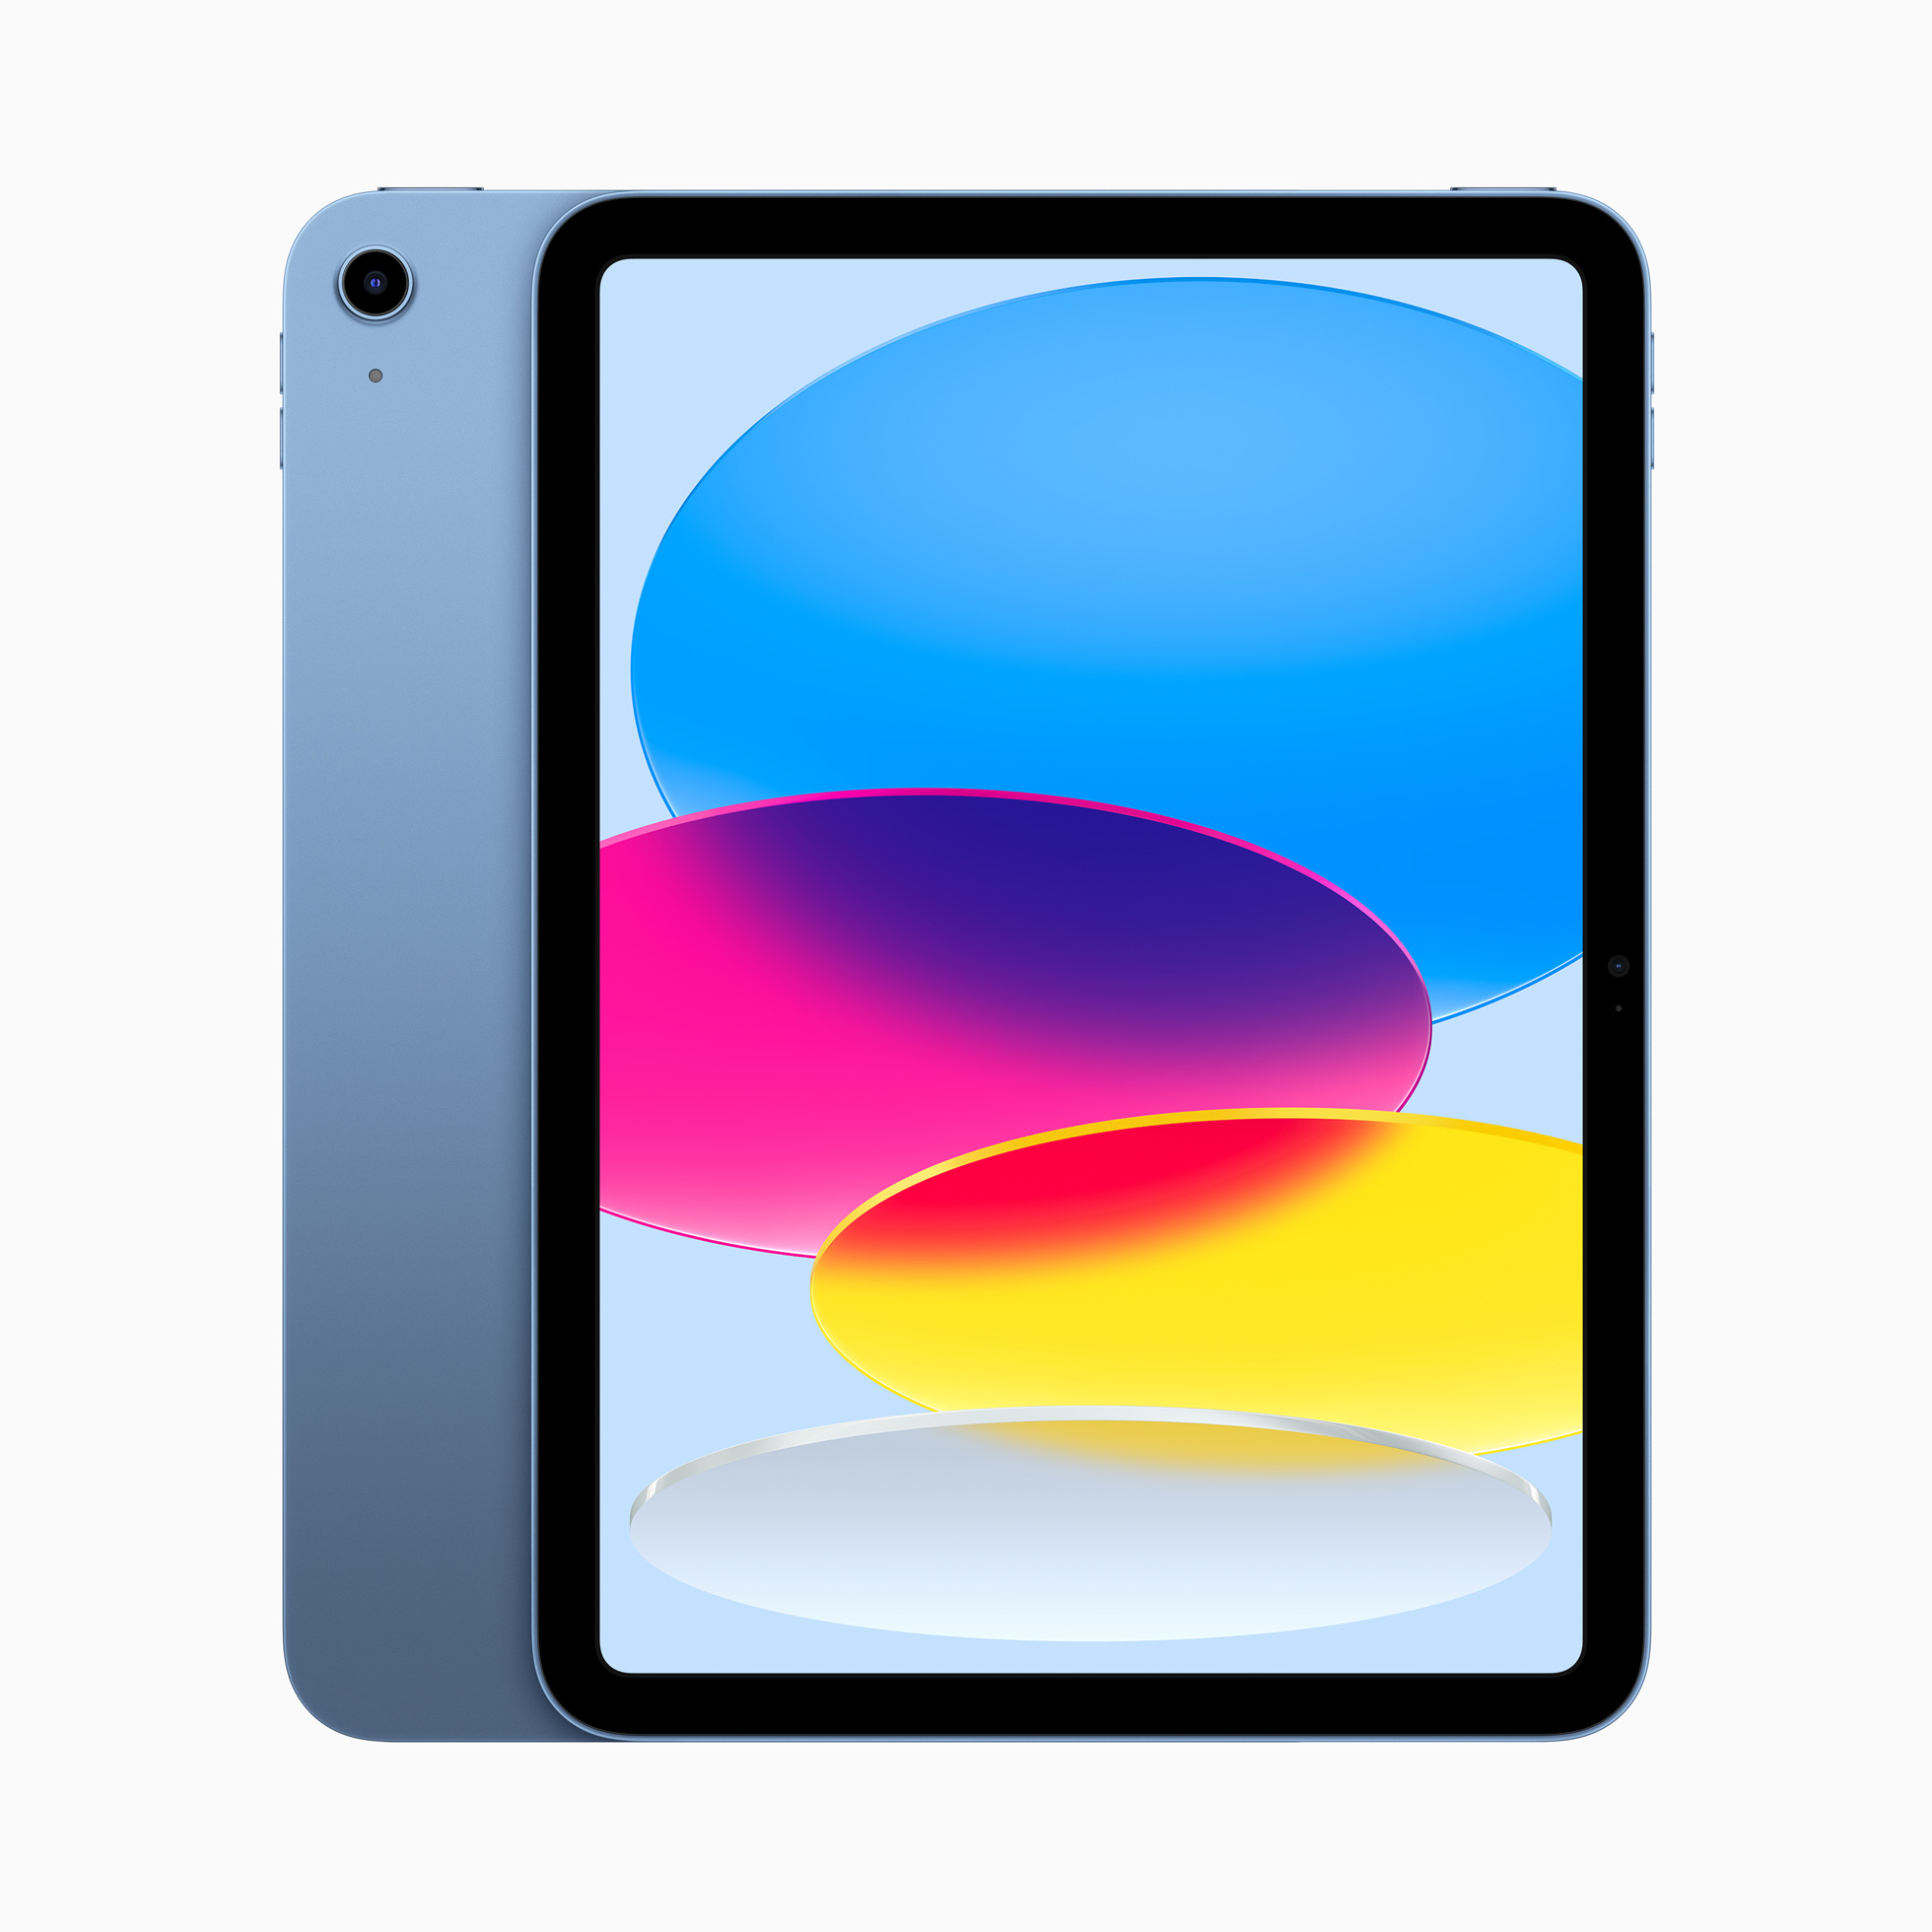 Apple iPad 2022 in blue